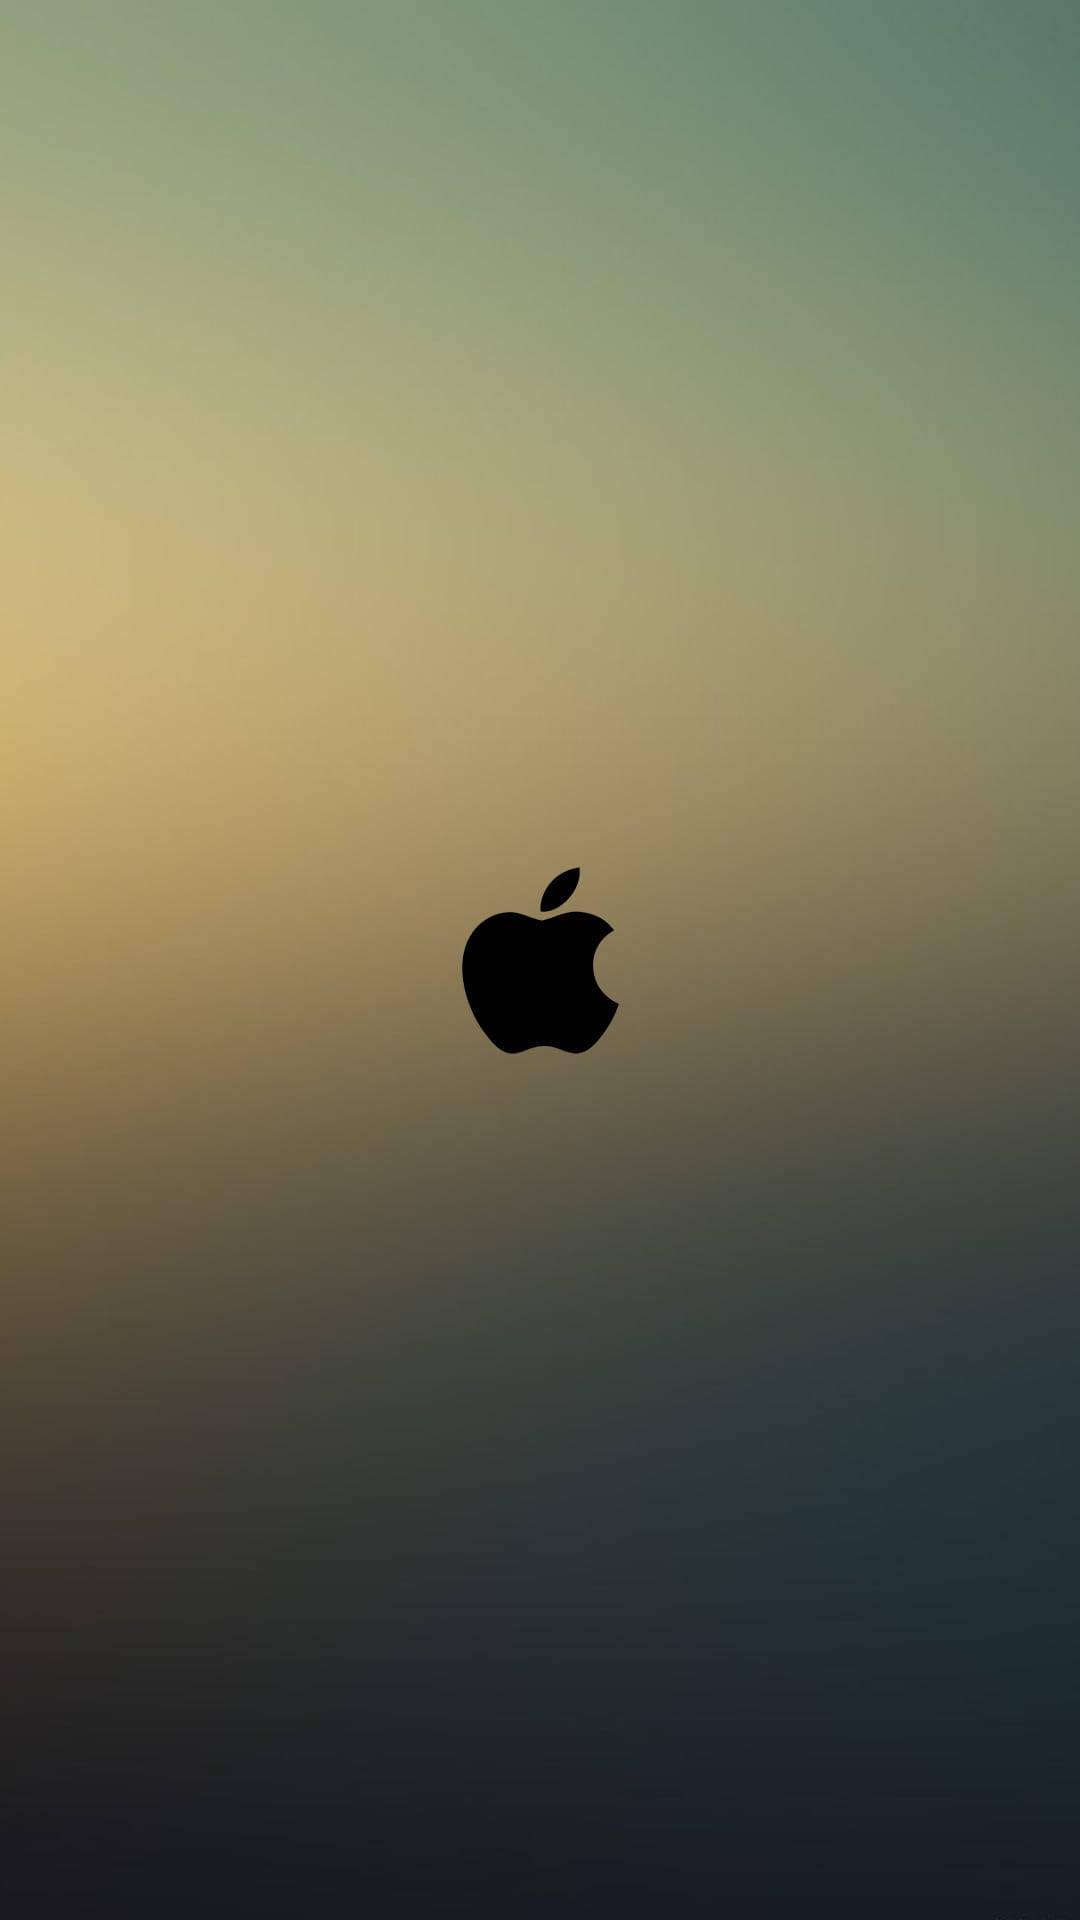 Majestic Black Apple Logo Glowing On A Dark Gradient Backdrop Background